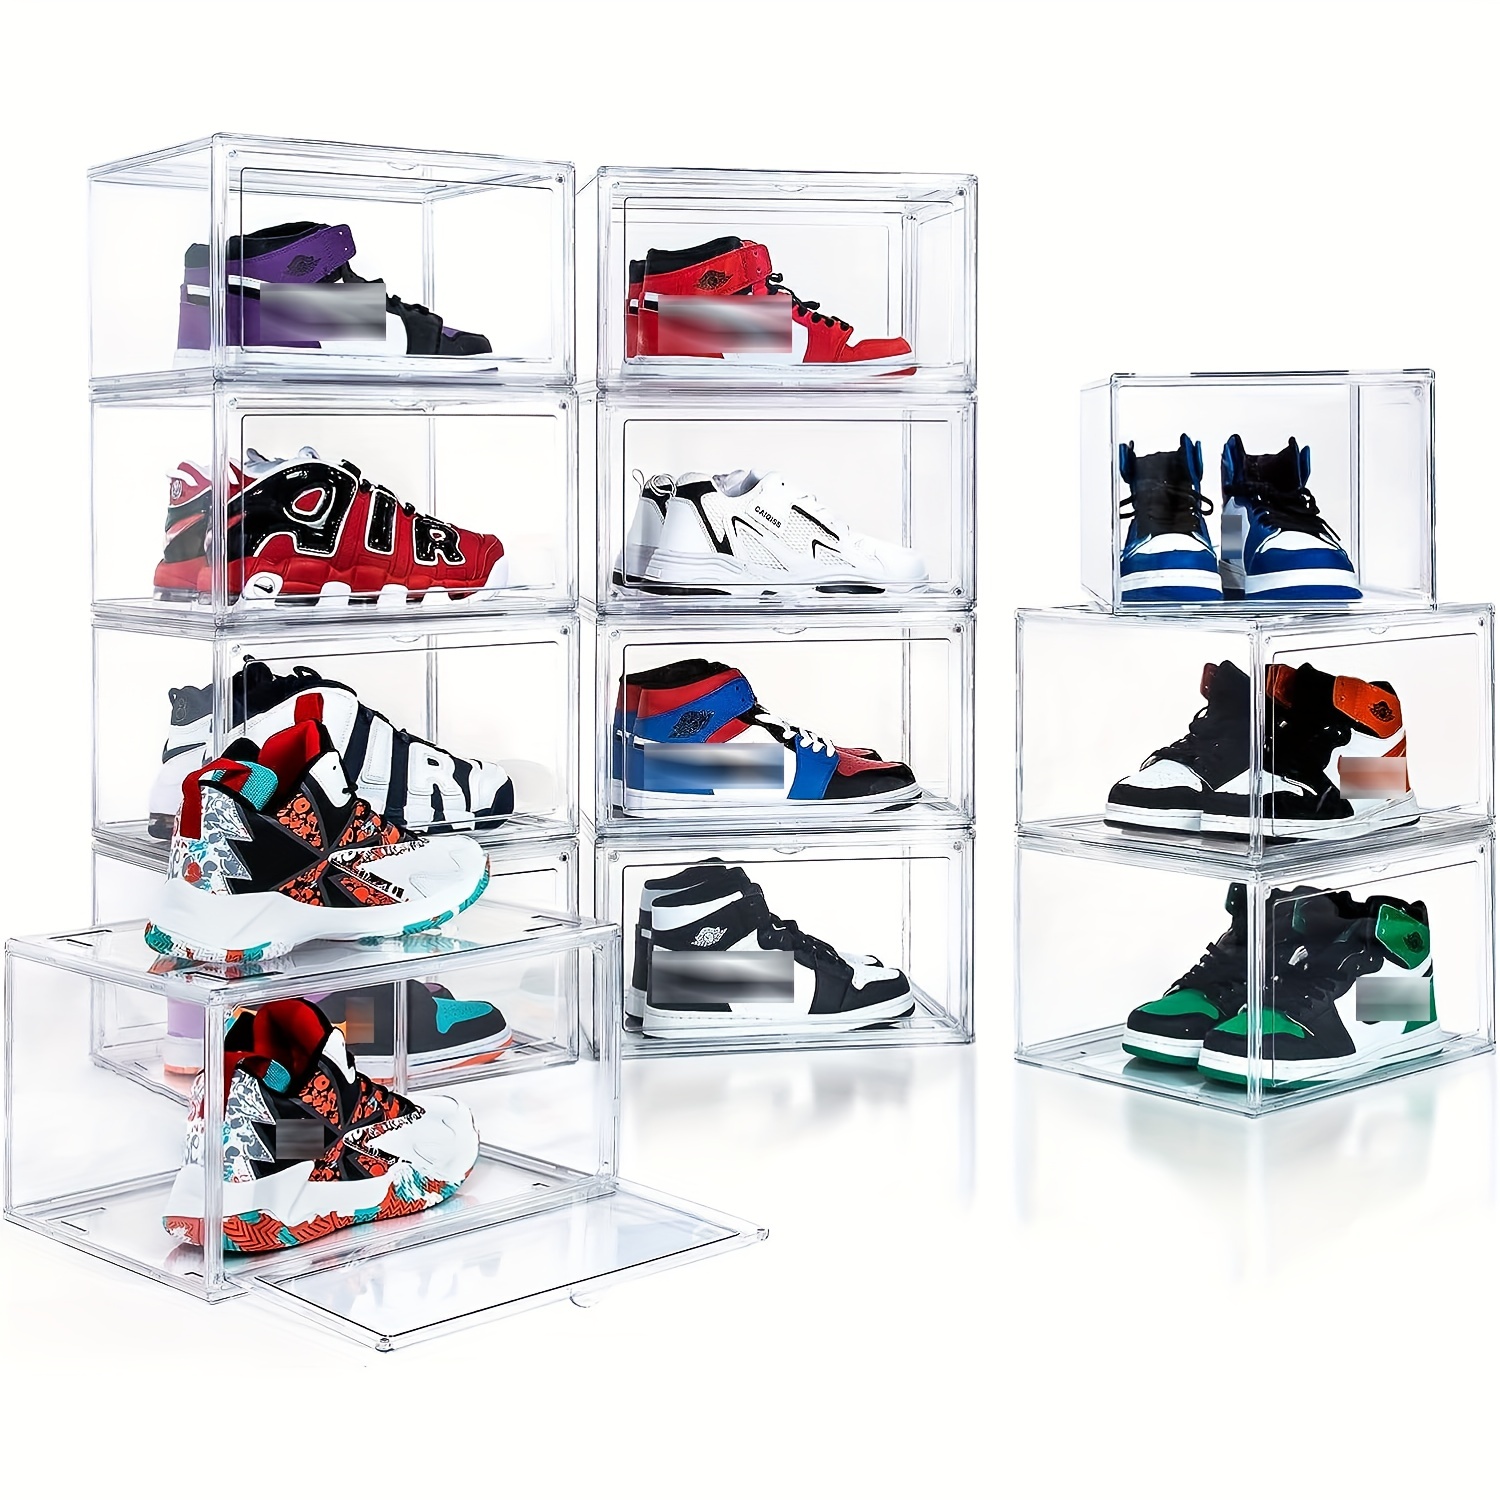 7 ideas creativas para guardar zapatos en espacios pequeños  Ordenador de  zapatos, Como organizar zapatos, Organizador de zapatos